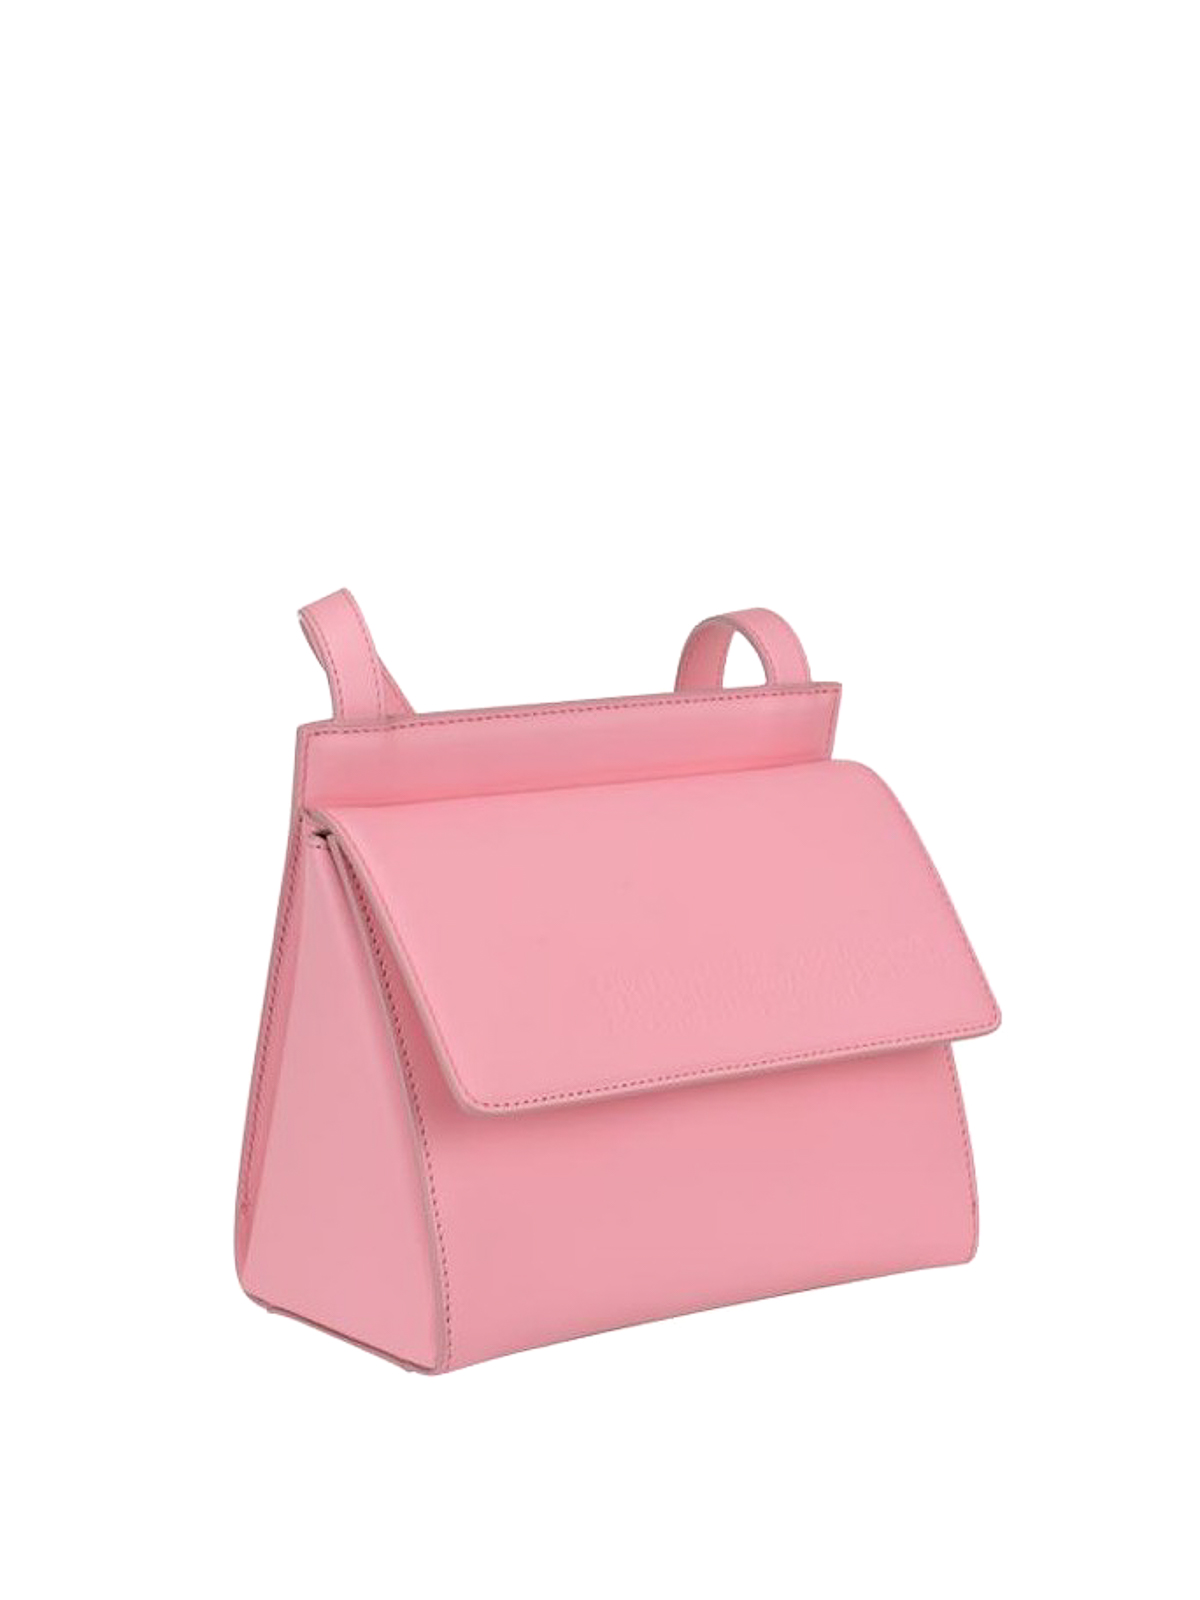 Cross body bags Calvin Klein - Pink leather small satchel - 83WLBA11T026P689